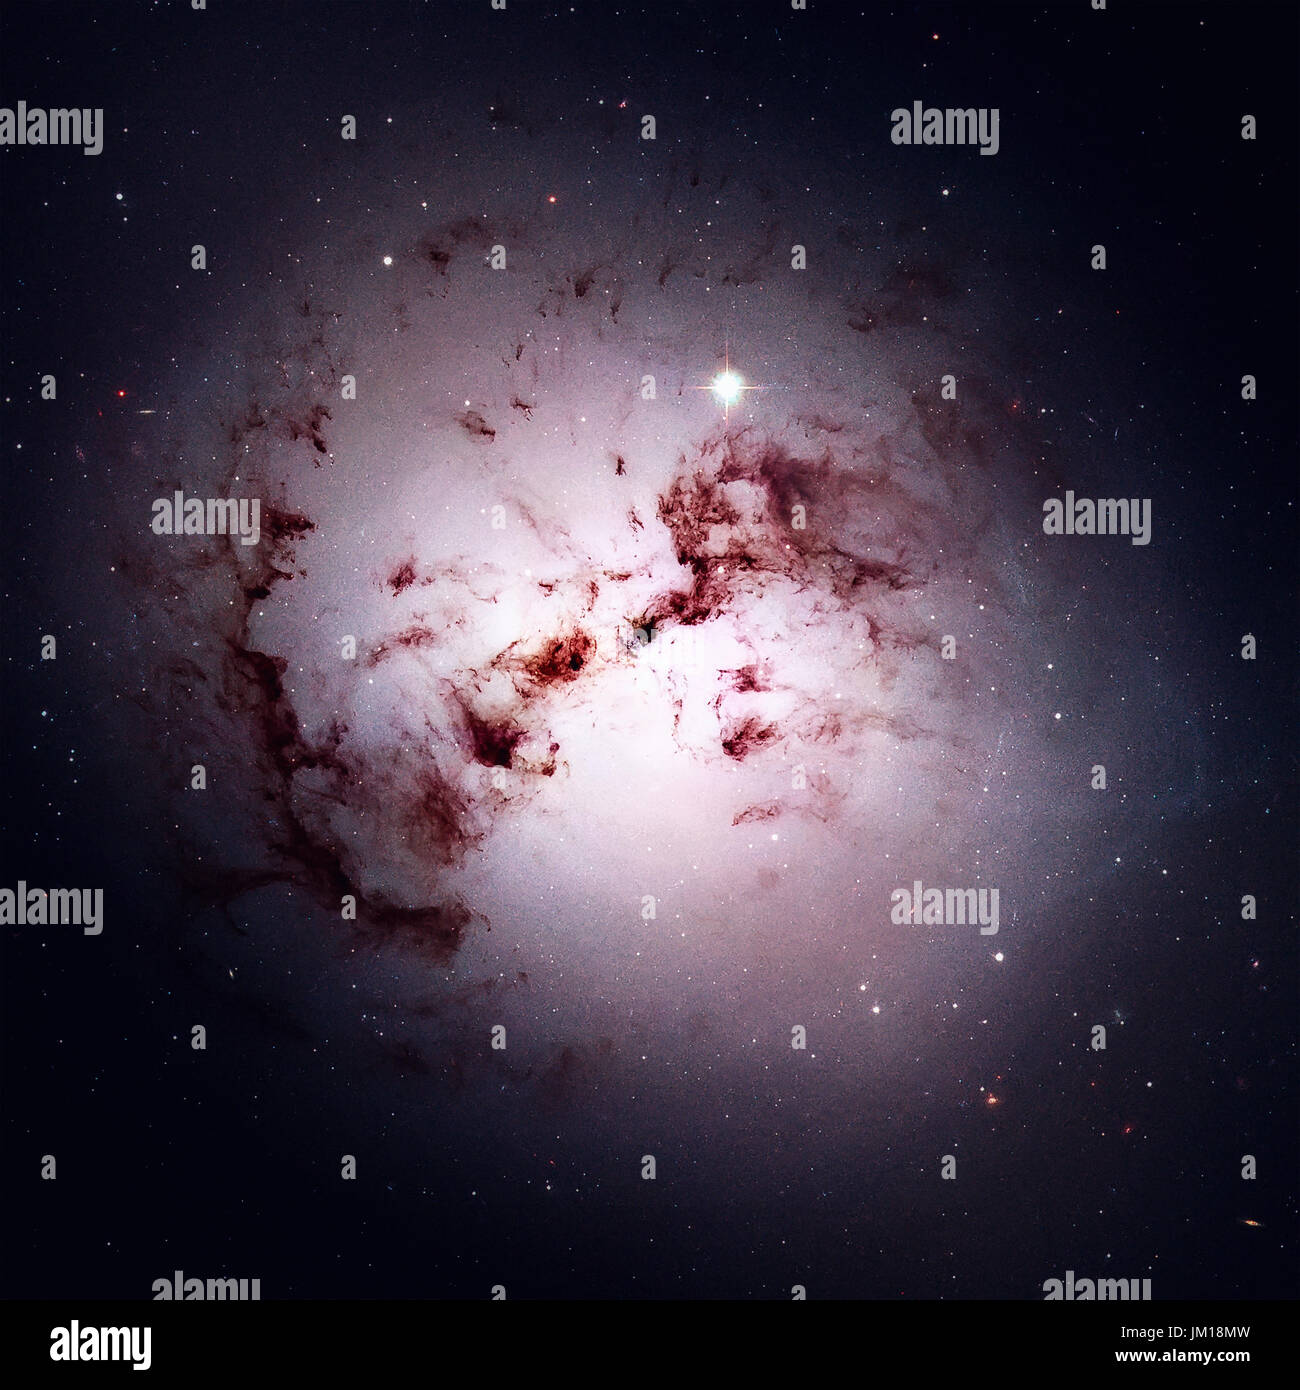 imagen elliptical galaxies